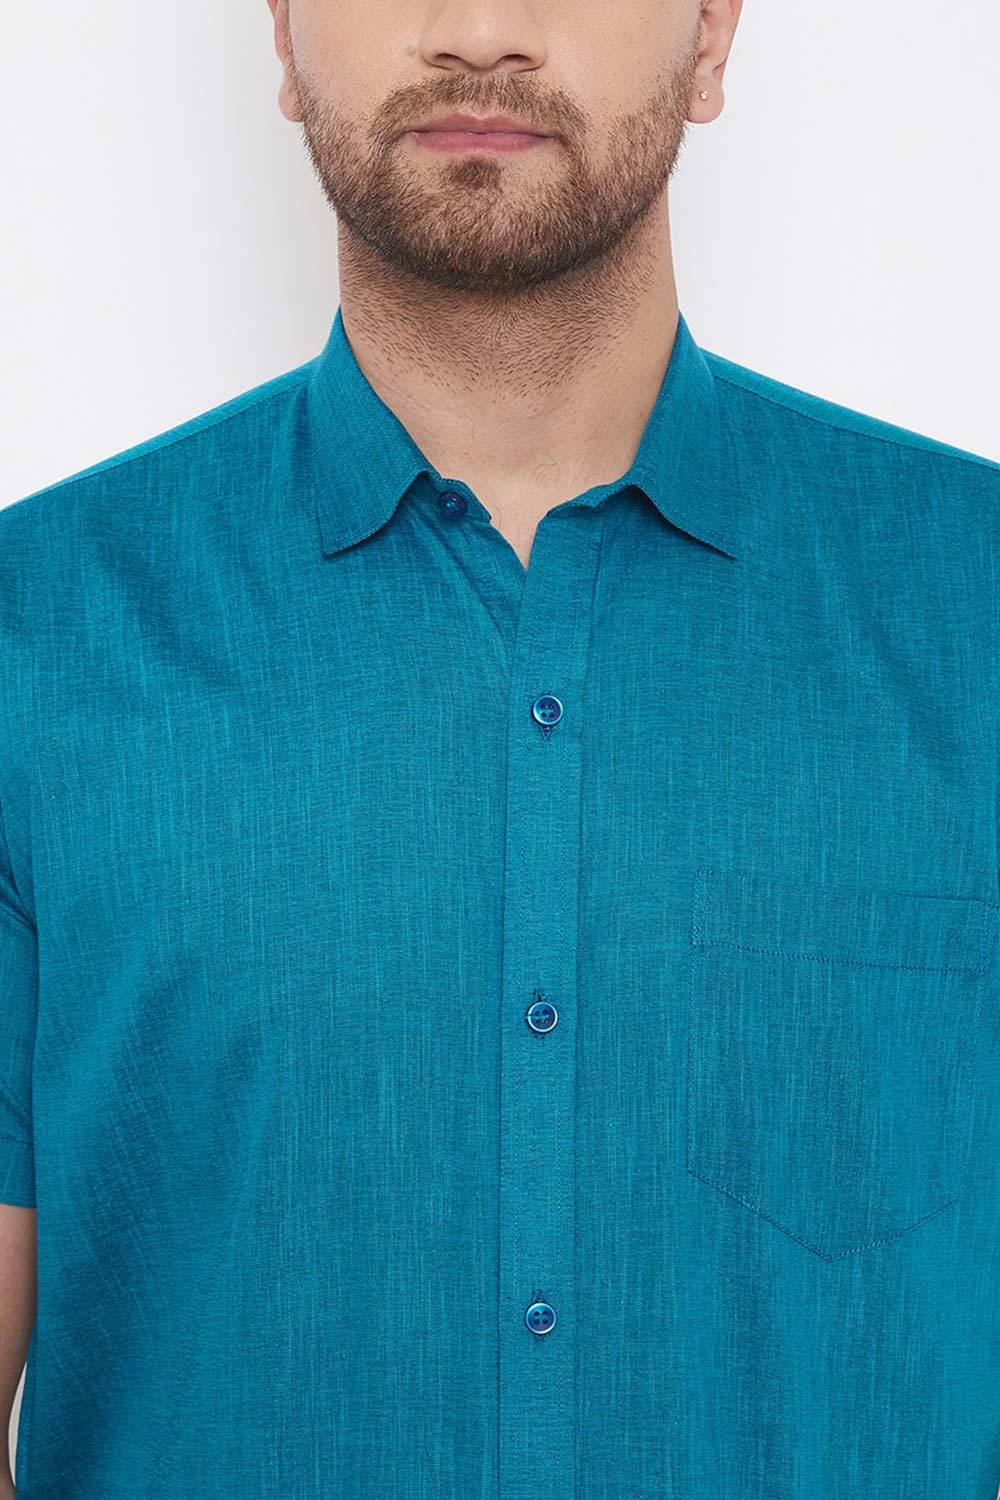 Latest Casual Ethnic Turquoise Shirt